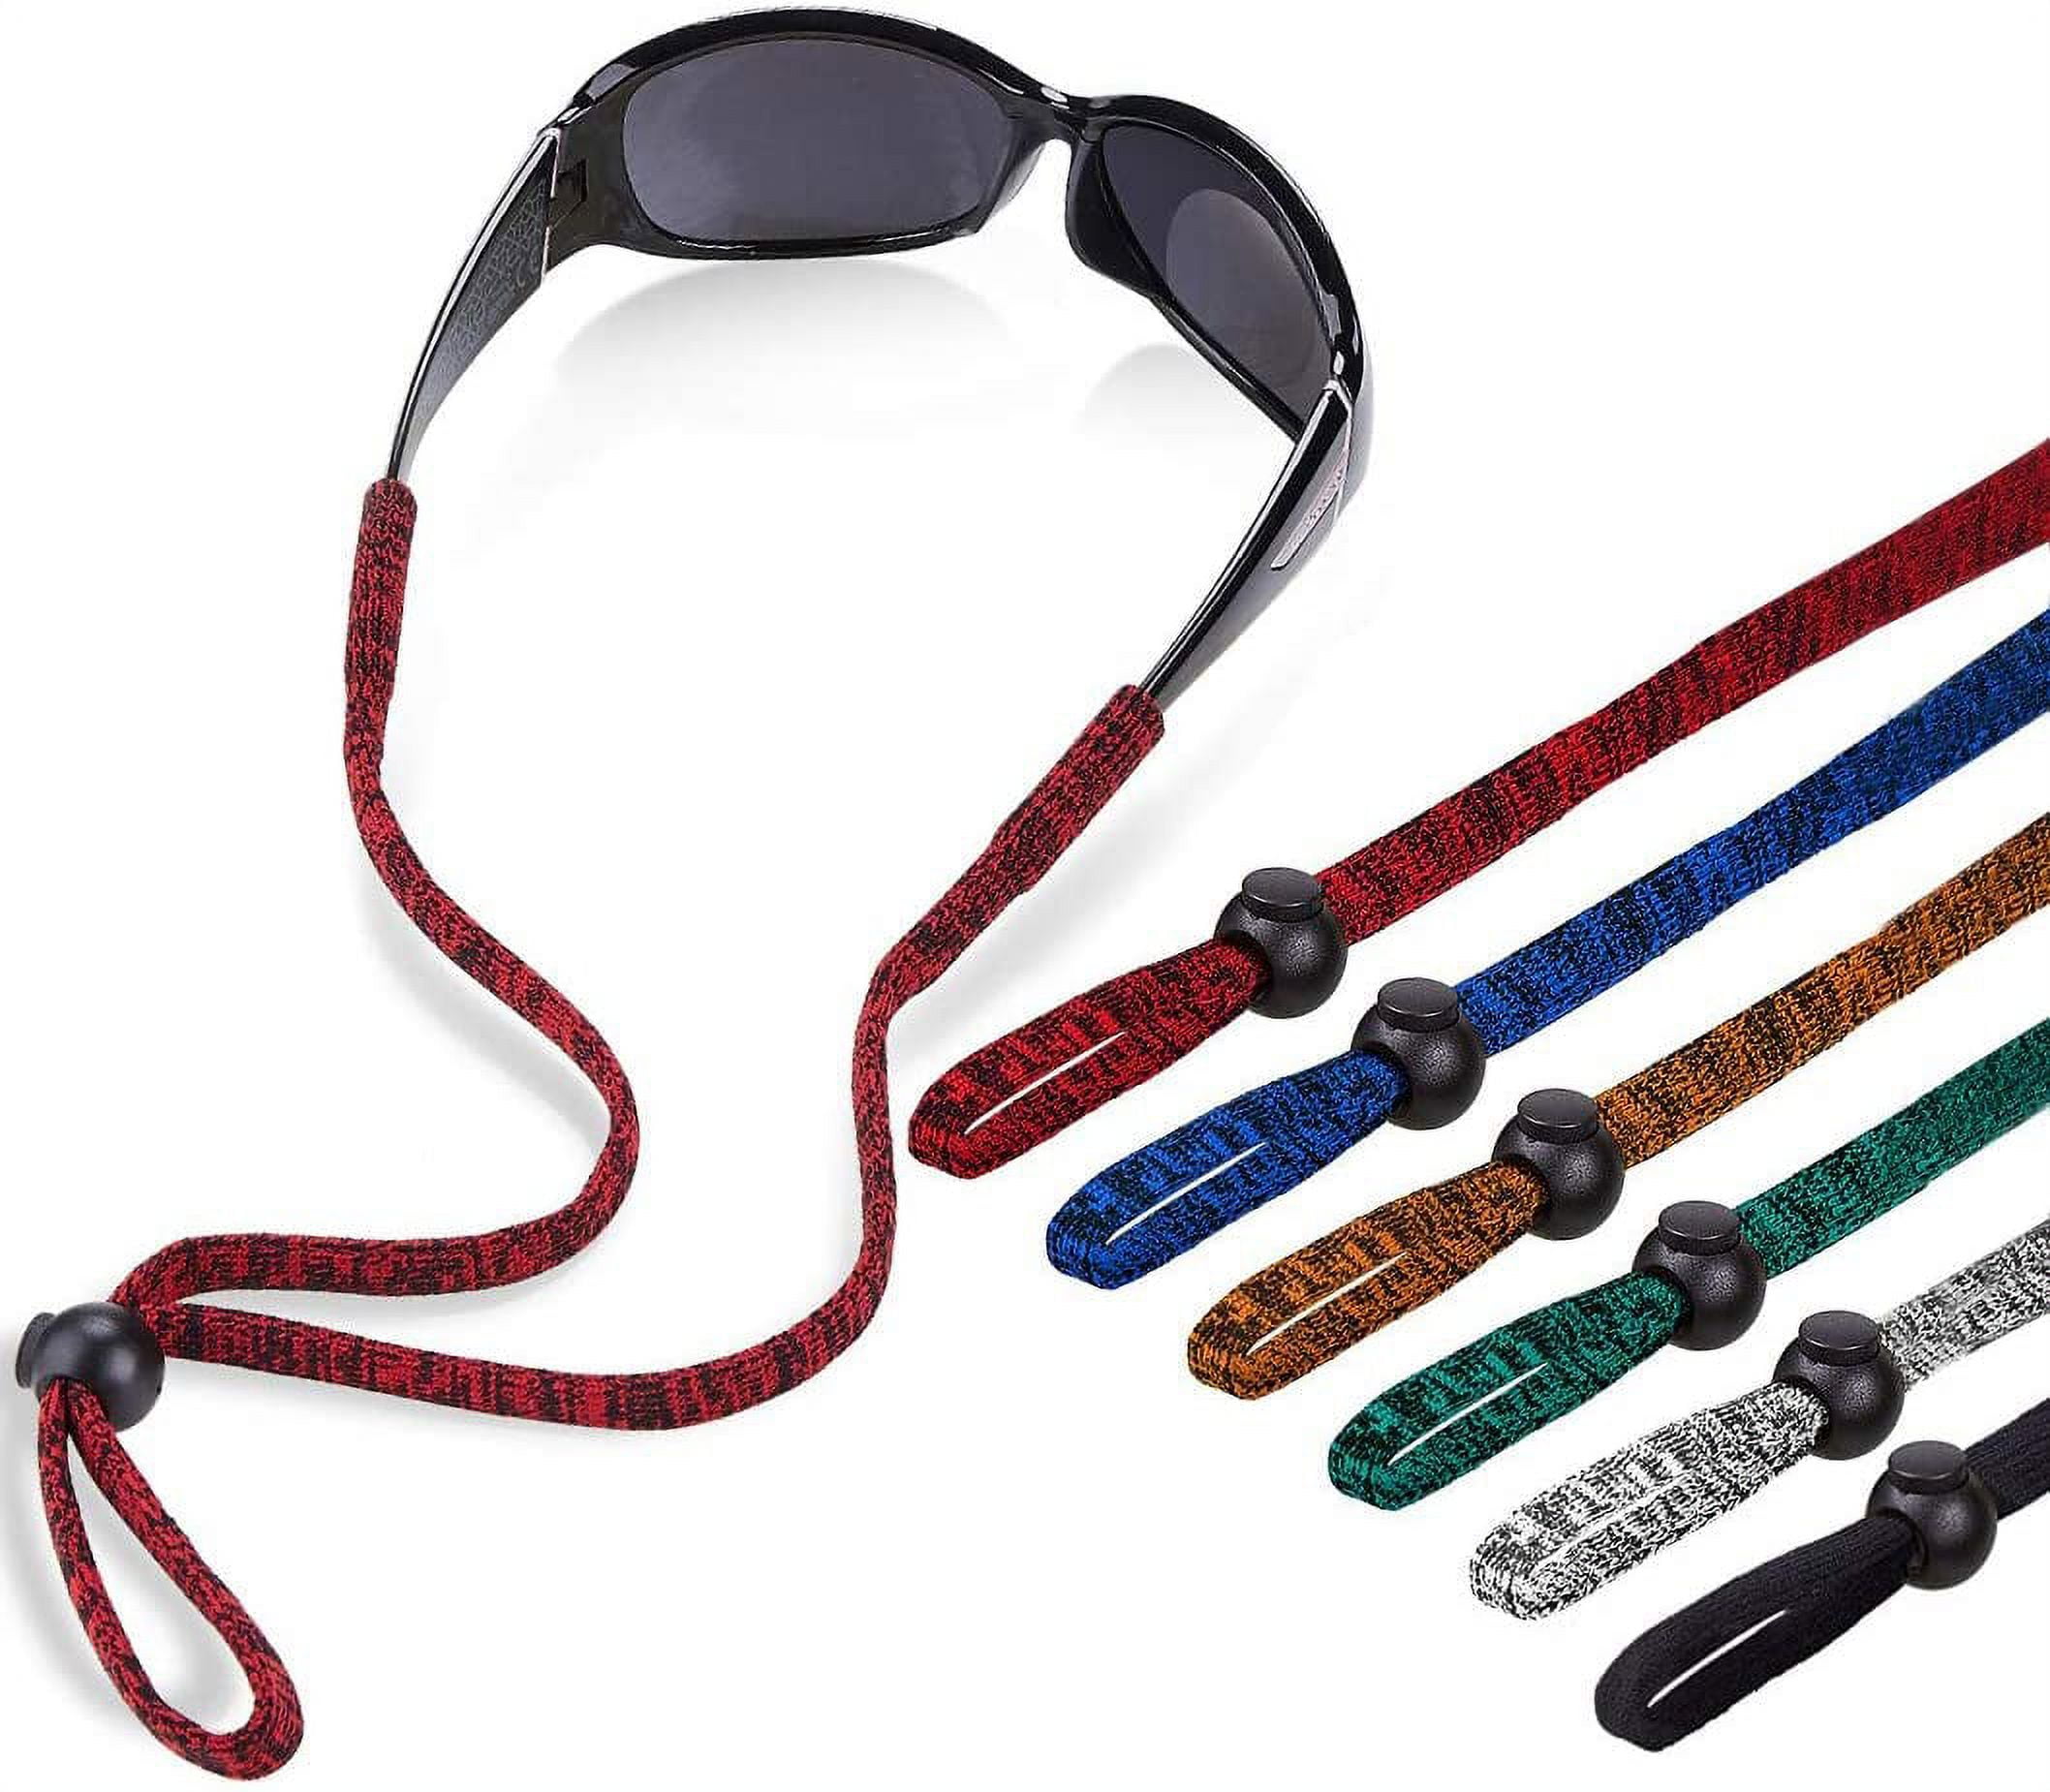 Generic Eye Glasses String Holder Strap - Eyeglass Straps Cords